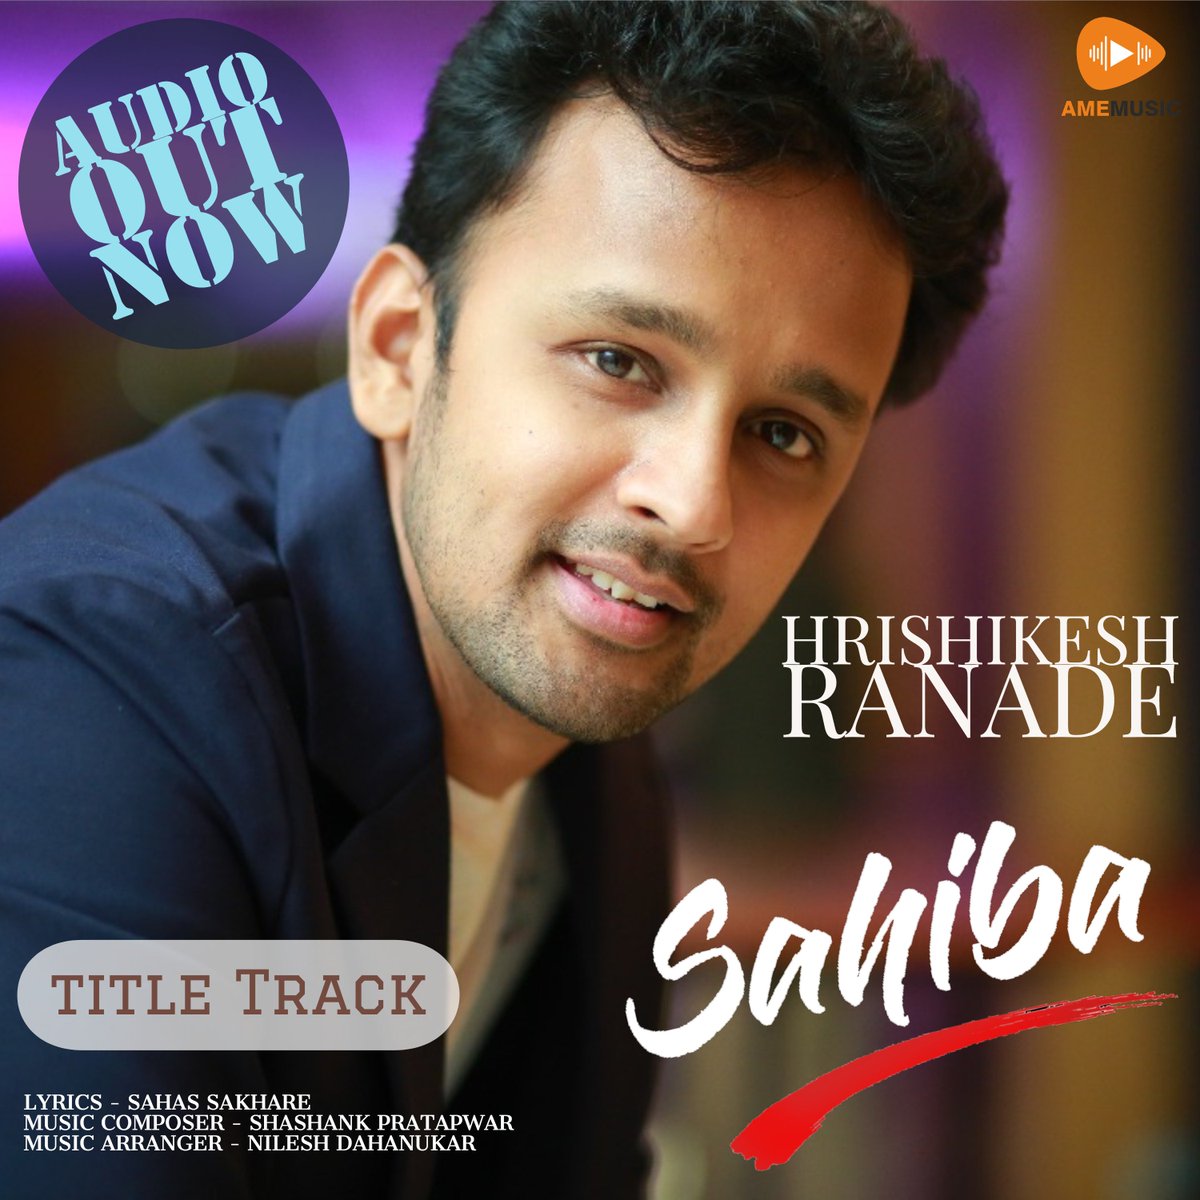 Listen, Stream and download to #Sahiba by #HrishikeshRanade now.
Saavn: bit.ly/2KX3p2b
iTunes: apple.co/2ukCuTM
Amazon Prime Music: amzn.to/2MW8Uvl 
Google Play Music: bit.ly/2NCAj6z